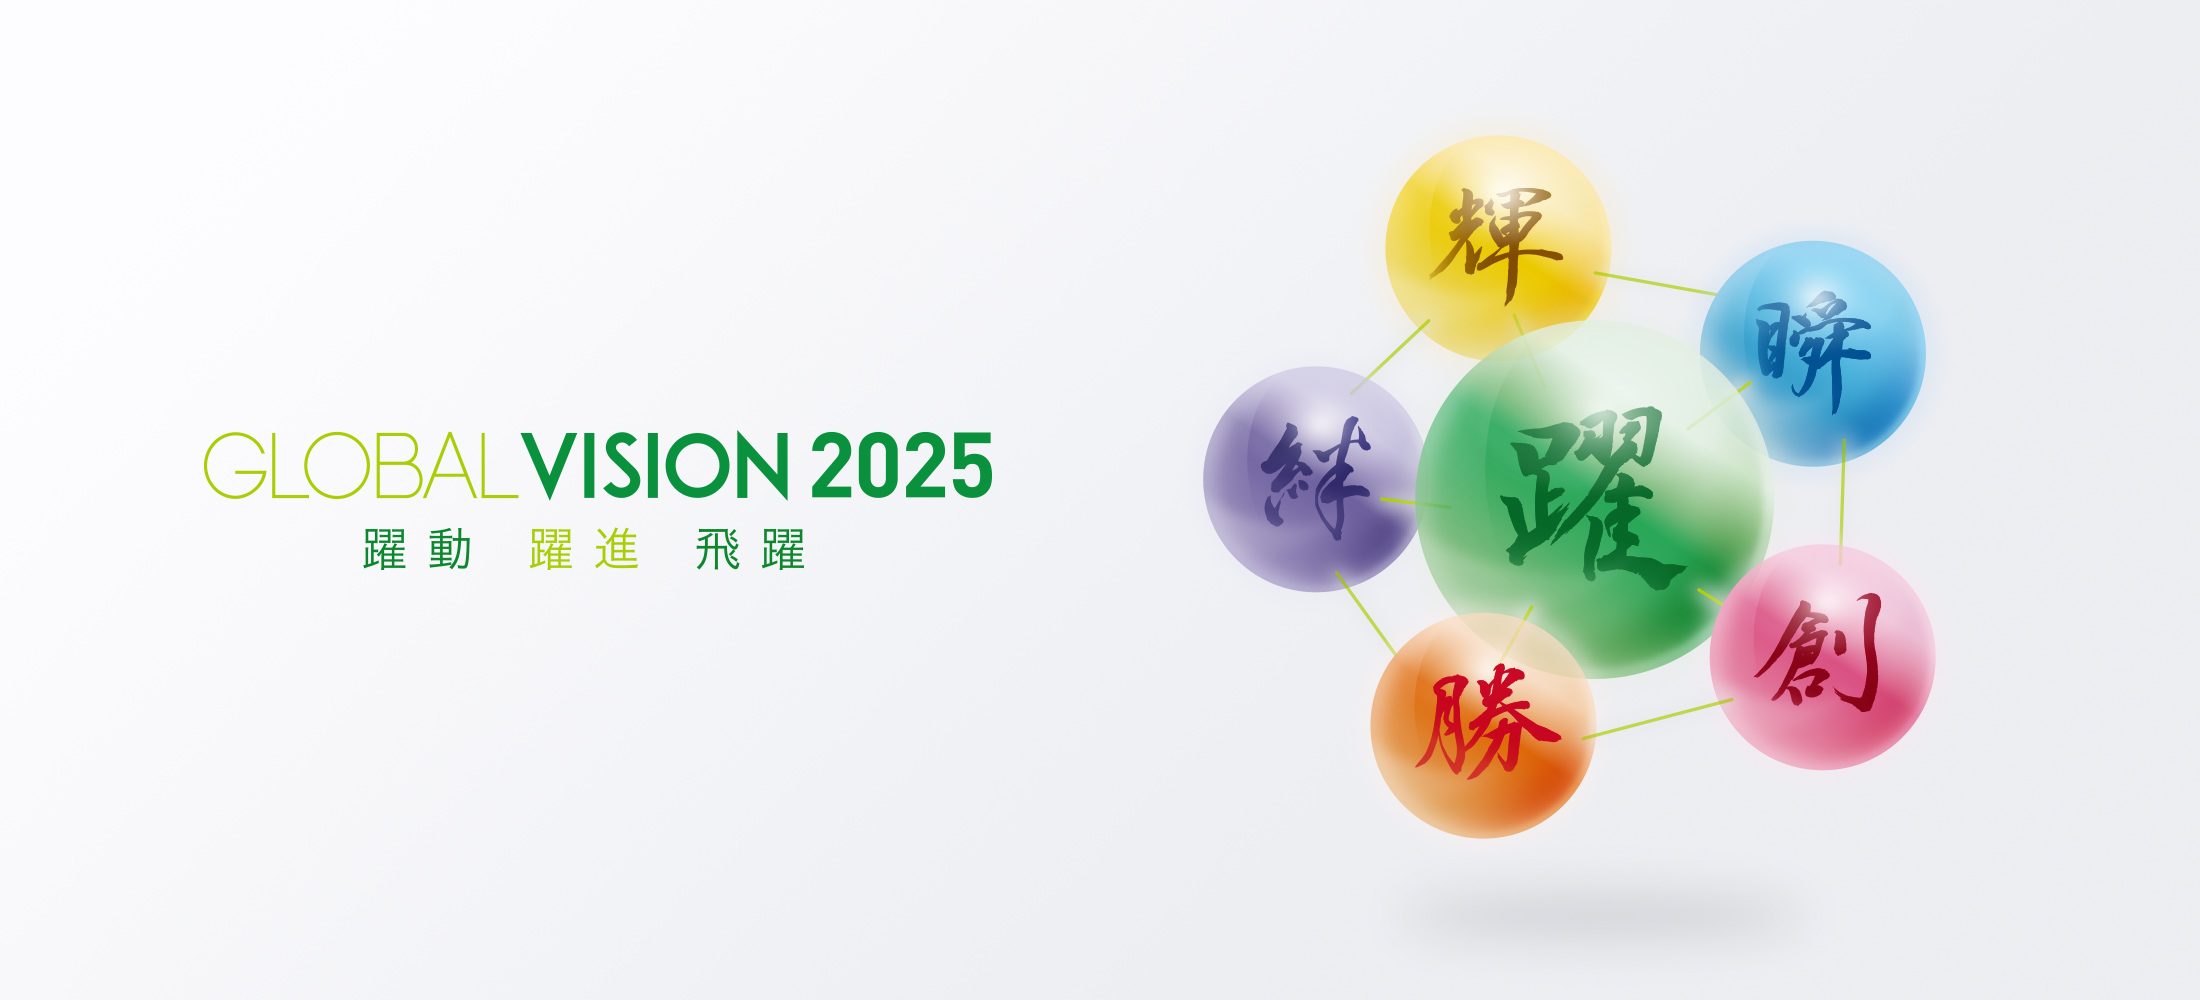 GLOBAL VISION 2025